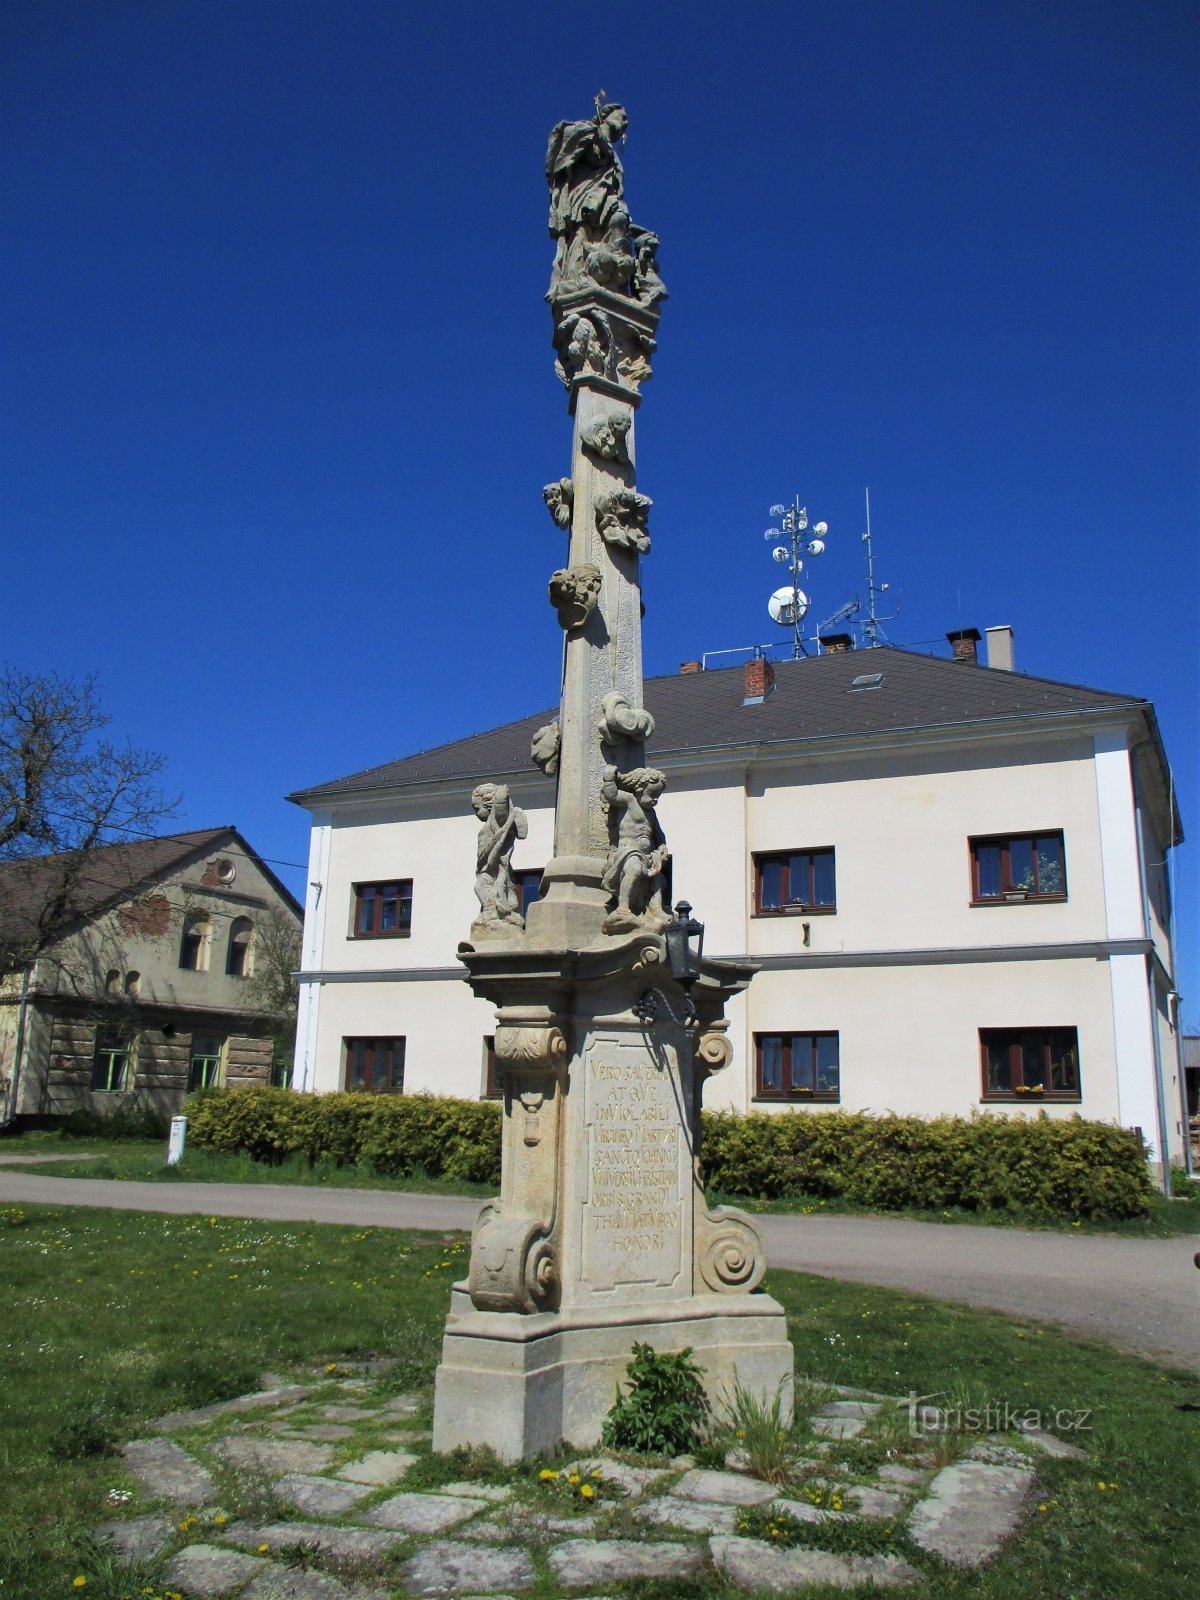 A column with a statue of St. John of Nepomuck (Chotěborky, April 20.4.2020, XNUMX)